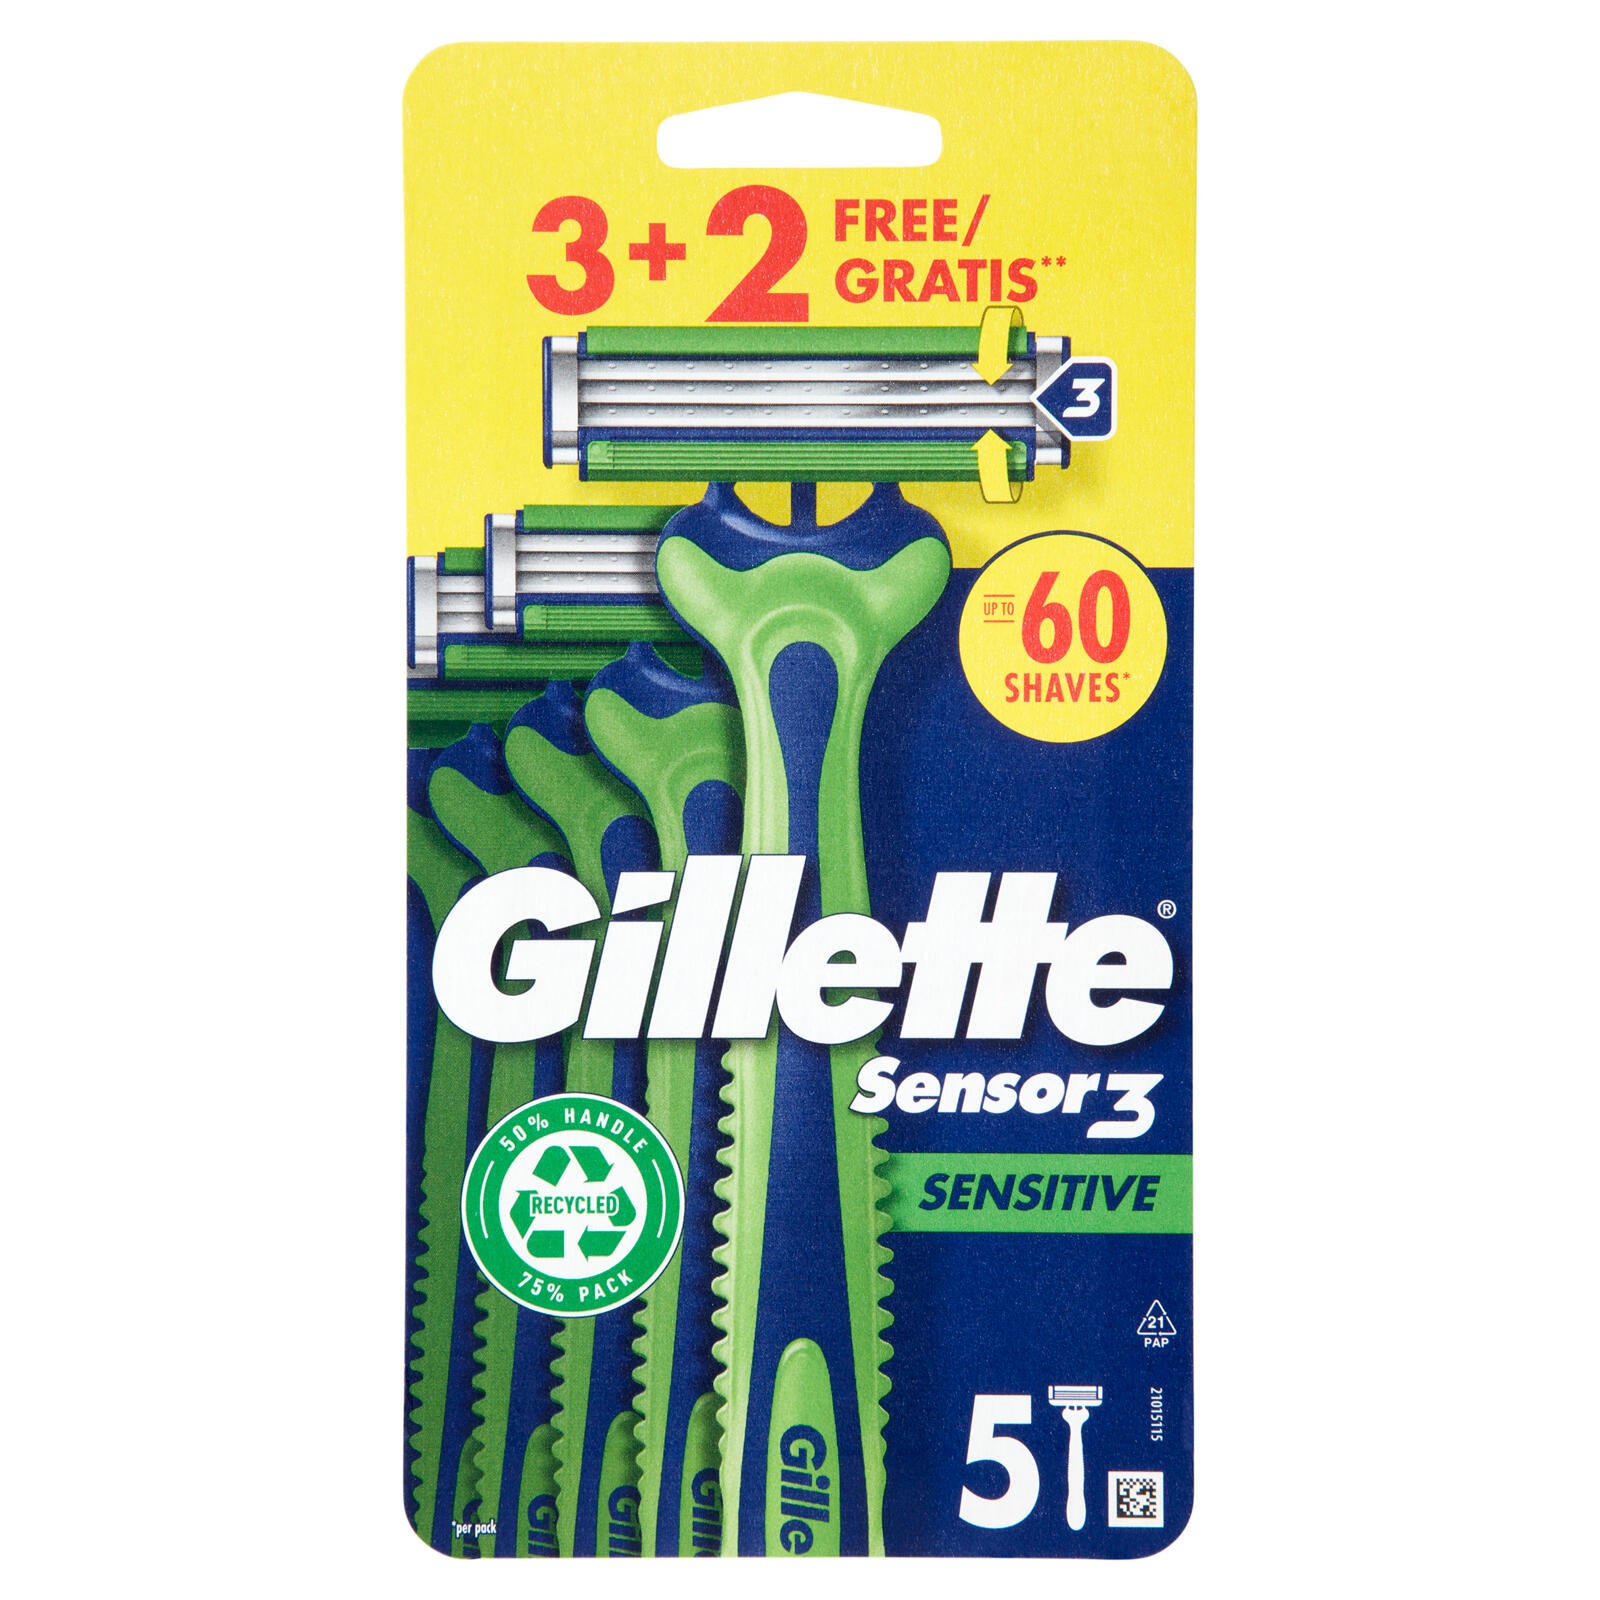 Gillette Sensor 3 Sensitive Rasoio da Uomo Usa e Getta, 3 Rasoi + 2 Gratis  ->